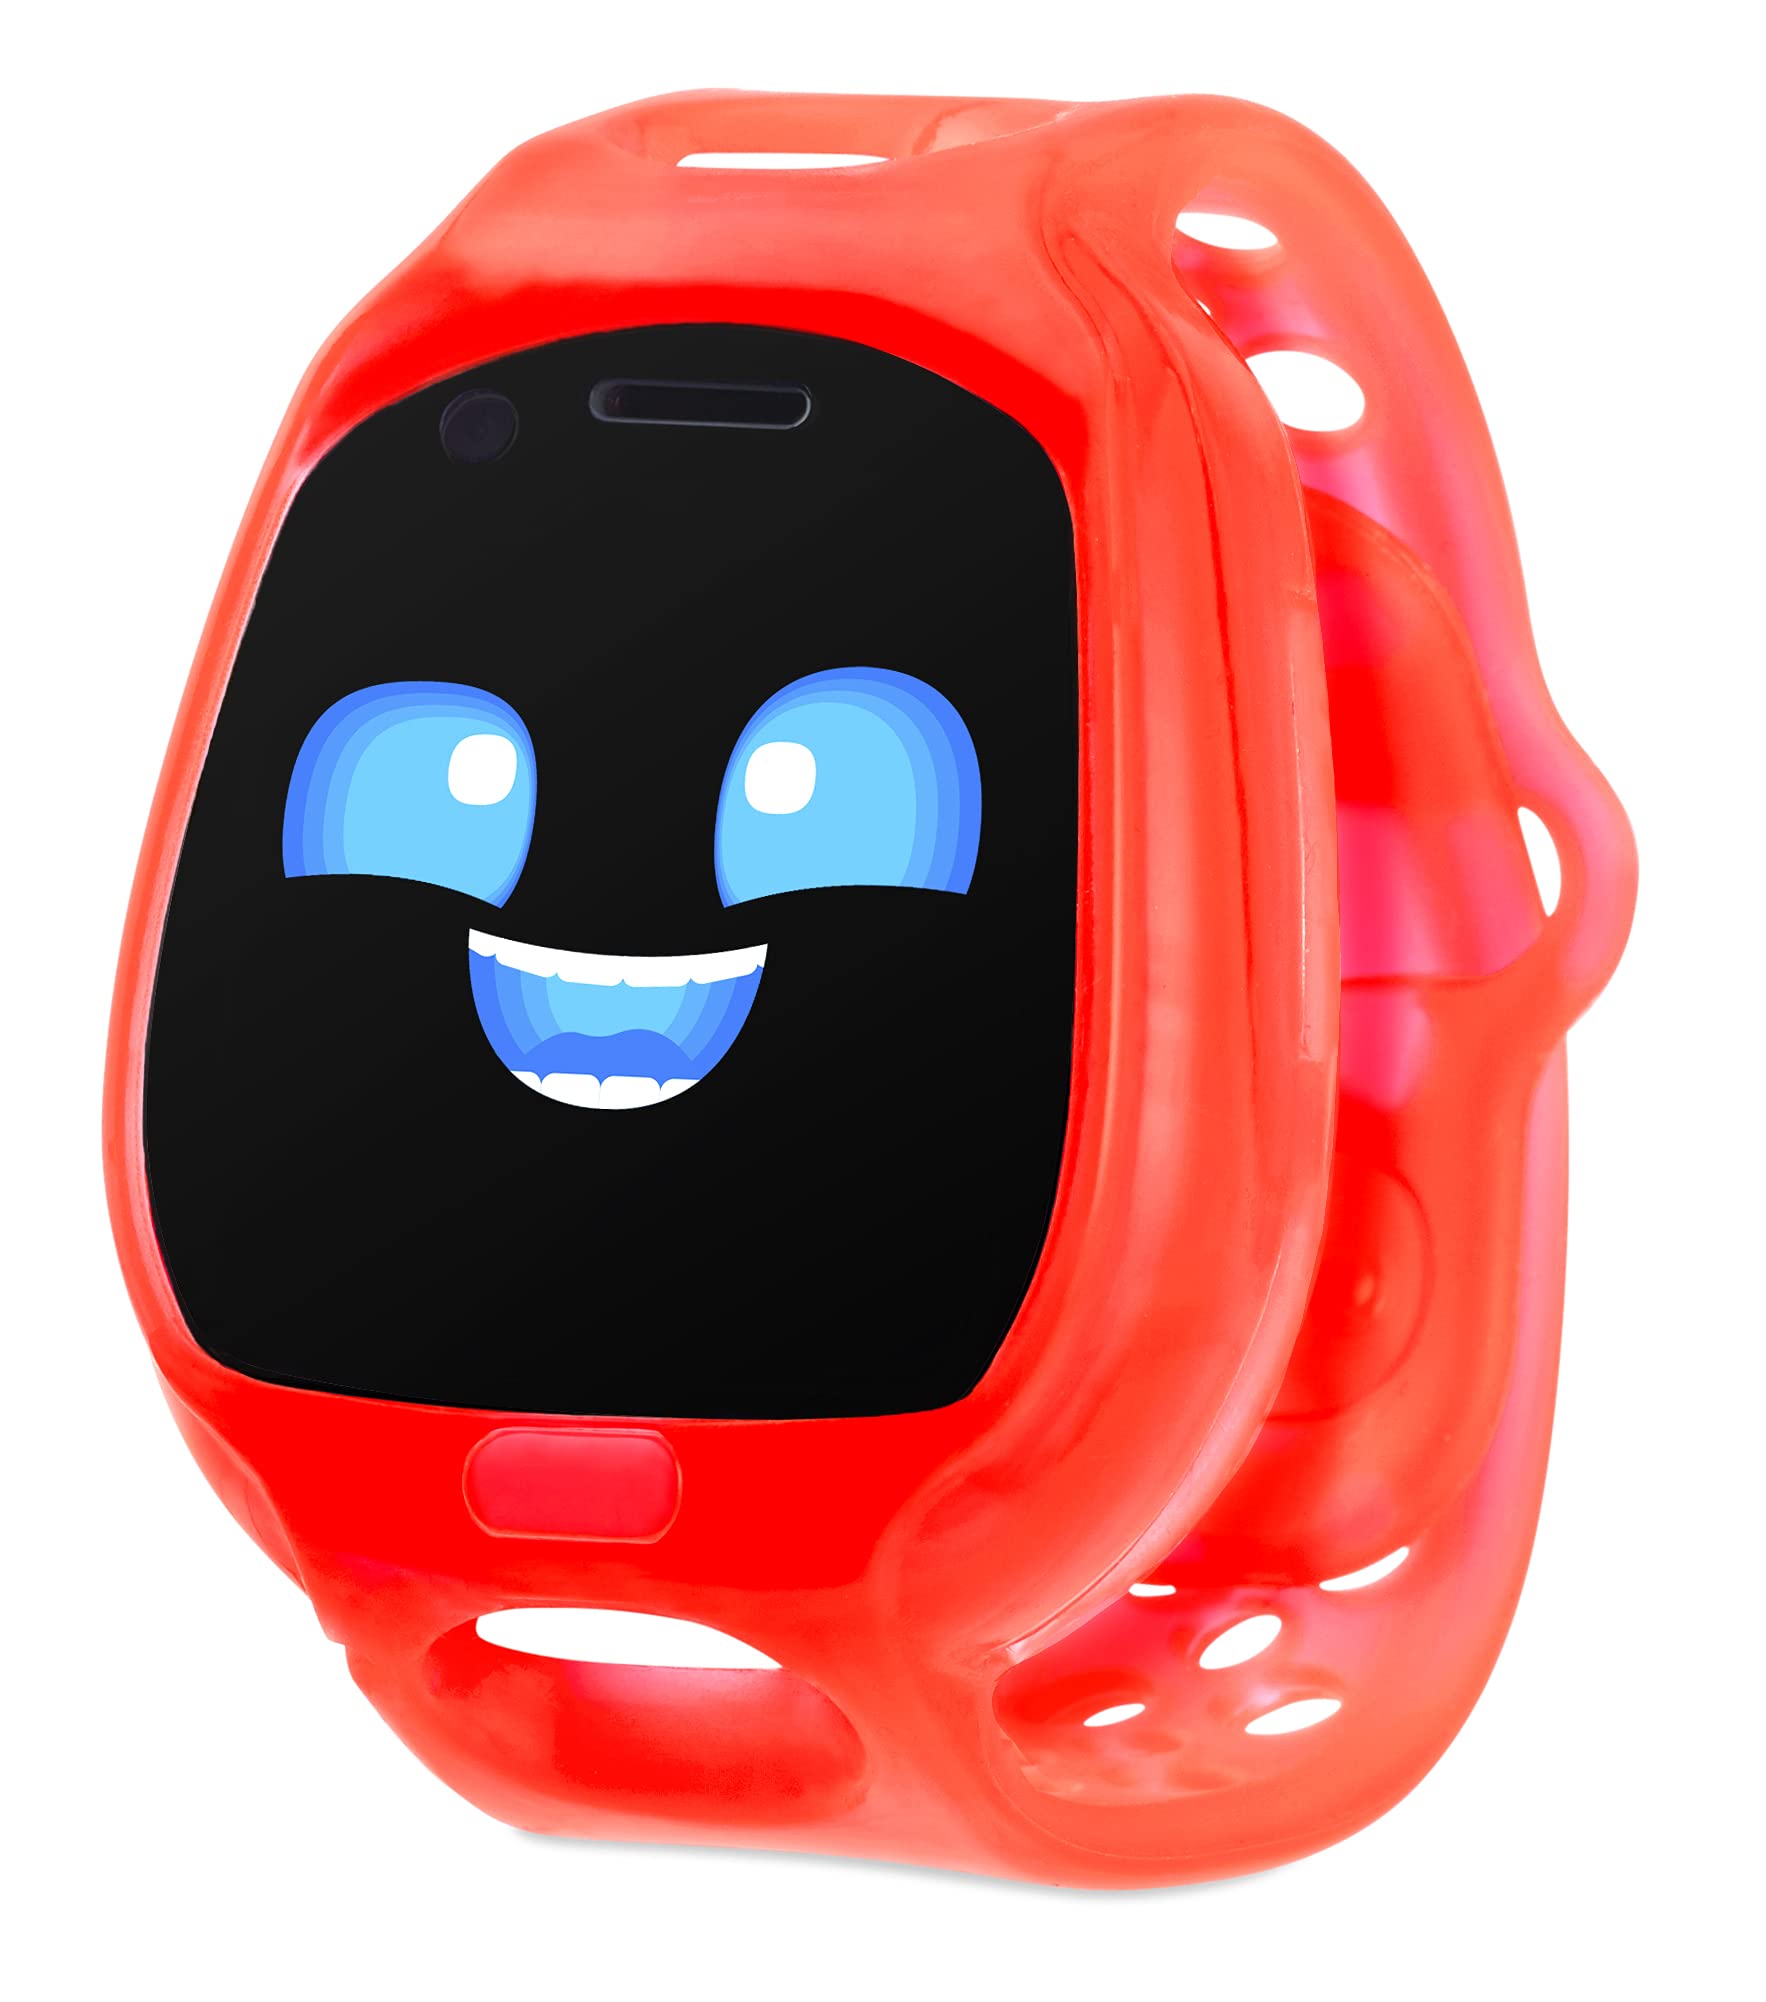 Little Tikes Tobi 2 Robot Red Smartwatch- 2 Cameras, Interactive Robot, Games, Videos, Selfies, Pedometer & More, Touchscreen, Parental Control- Stem Gifts, for Kids Boys Girls 6 7 8+